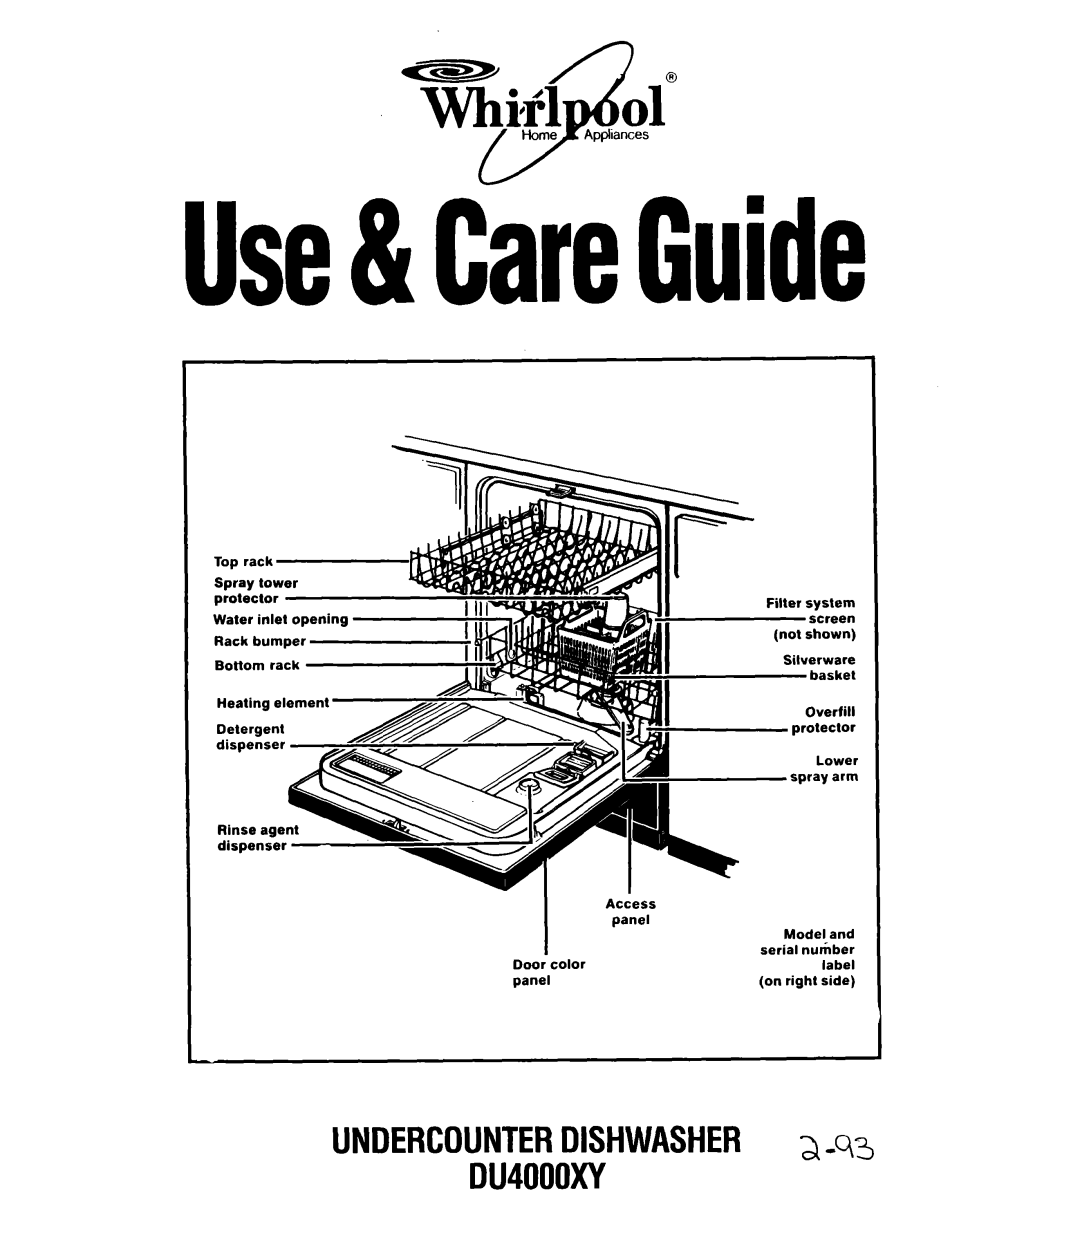 Whirlpool manual kfl of, Use&CareGuide, UNDERCOUNTERDISHWASHER 3-.93 DU4000XY 